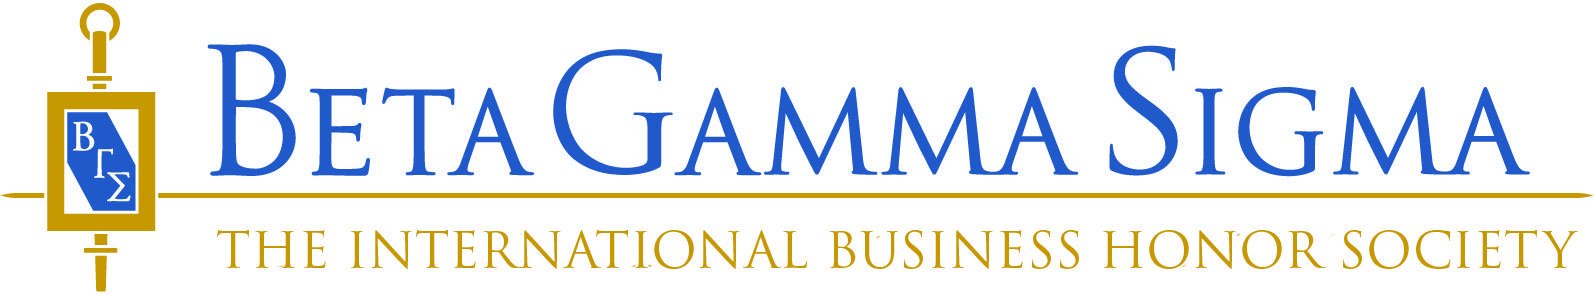 Gamma Line Logo - BGS Logos & Style Guide - Beta Gamma Sigma